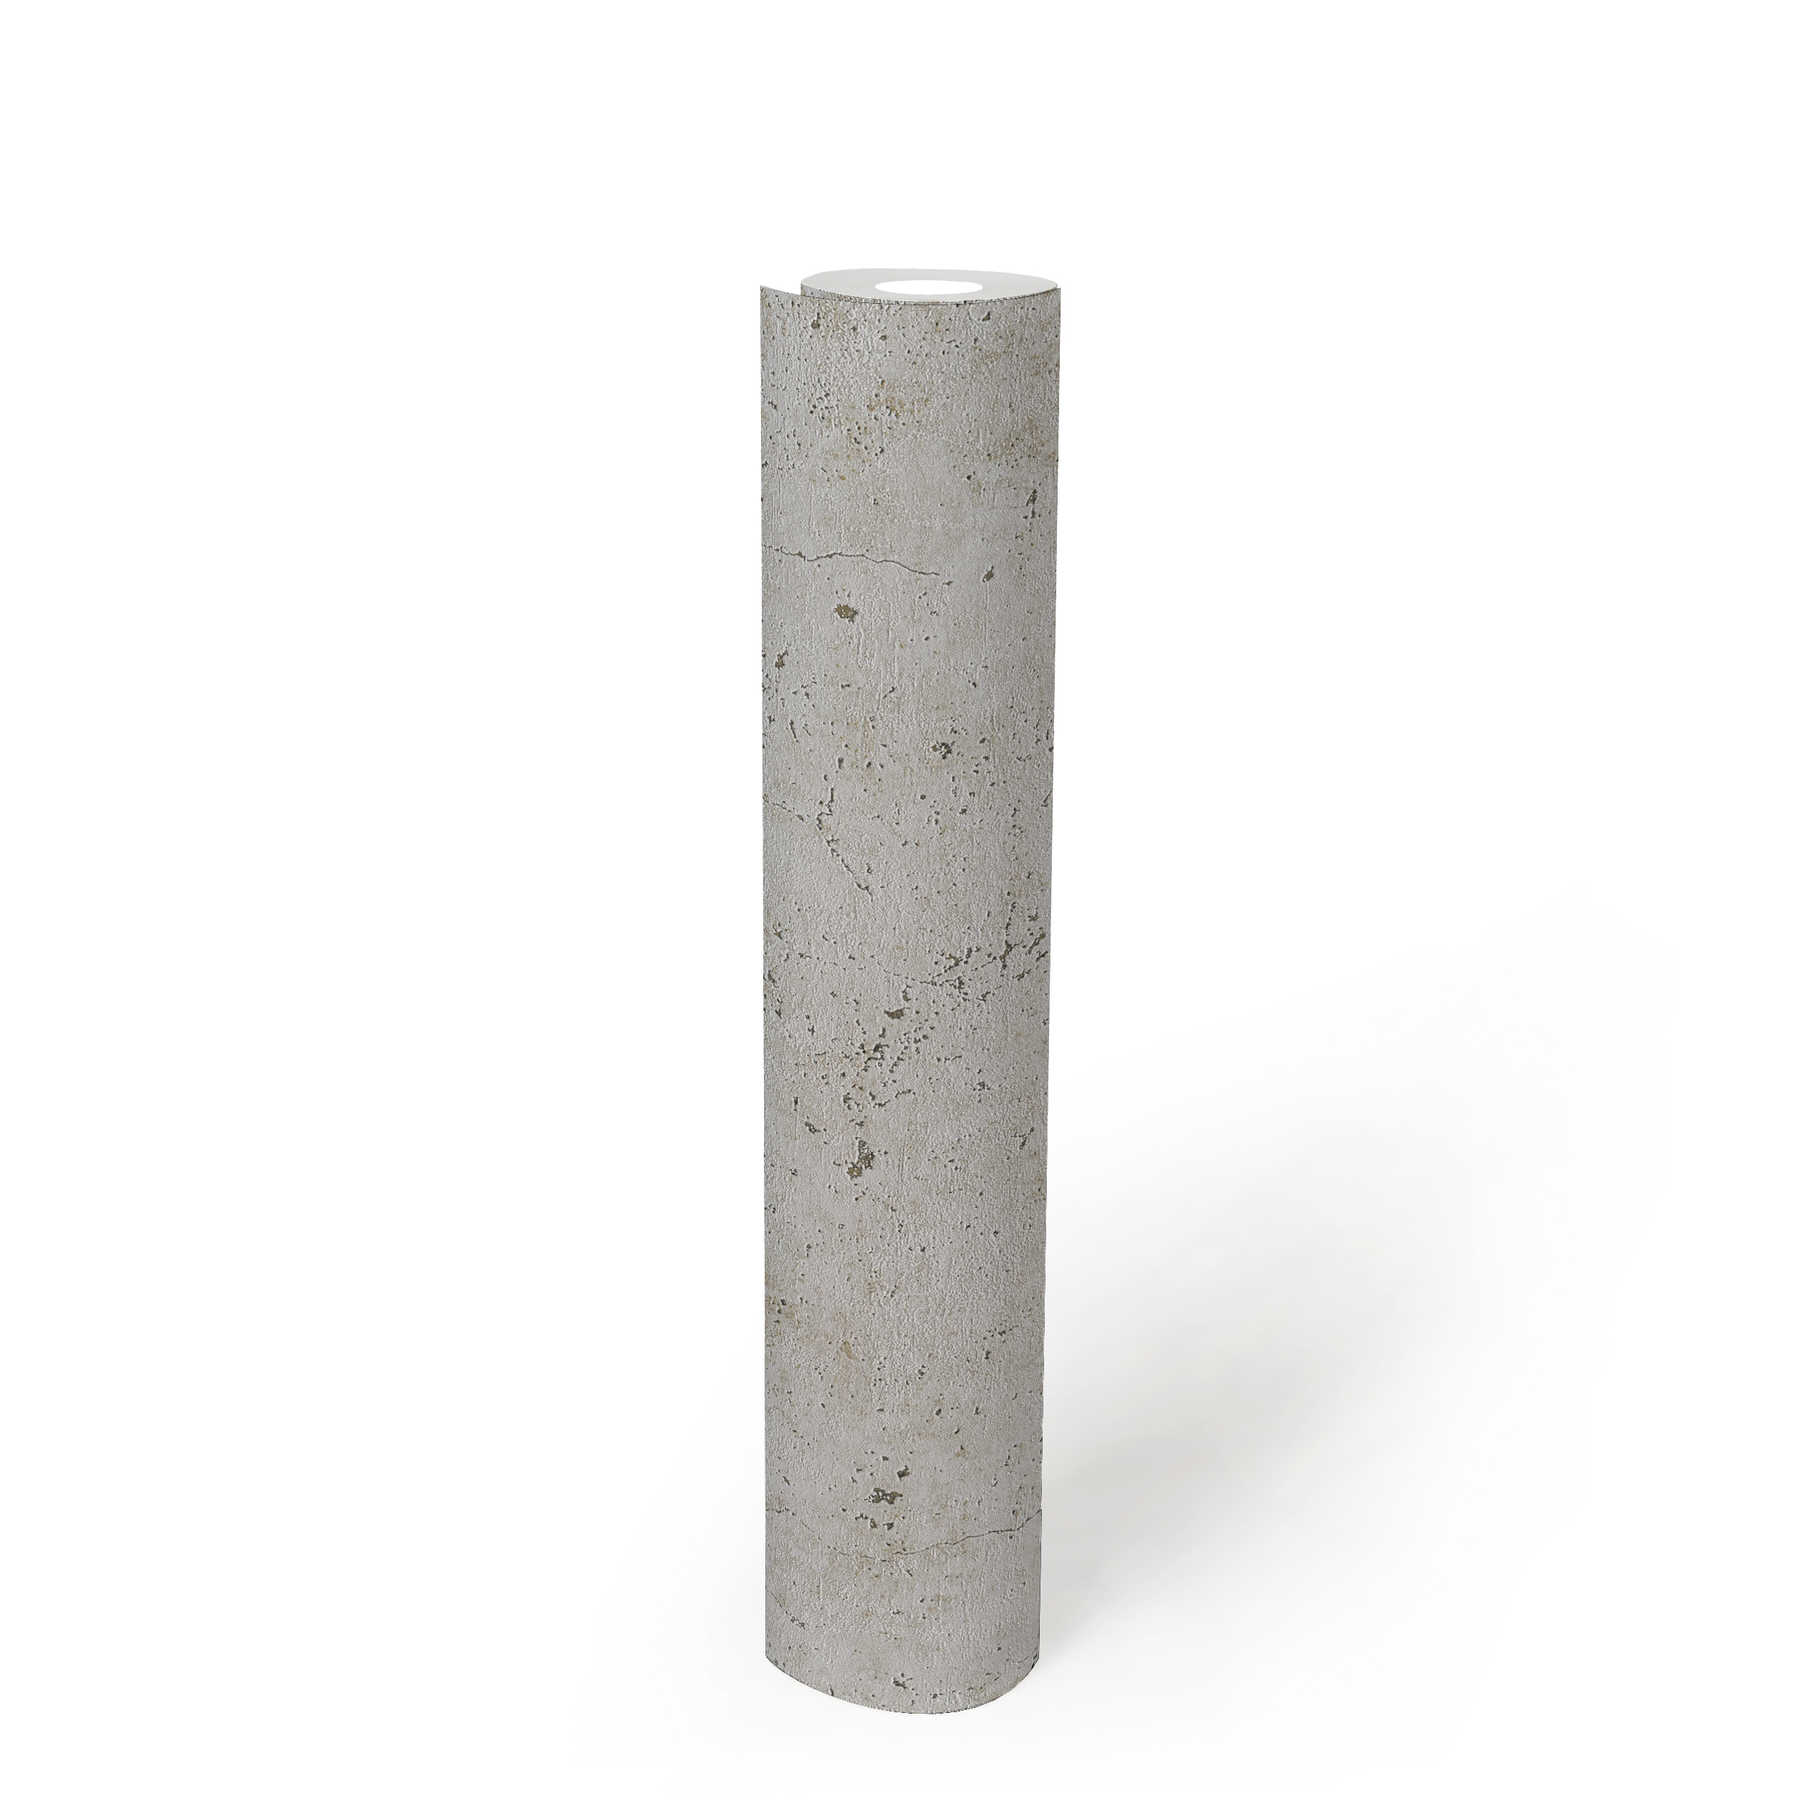             Wallpaper with concrete look, optical cracks & pores - grey
        